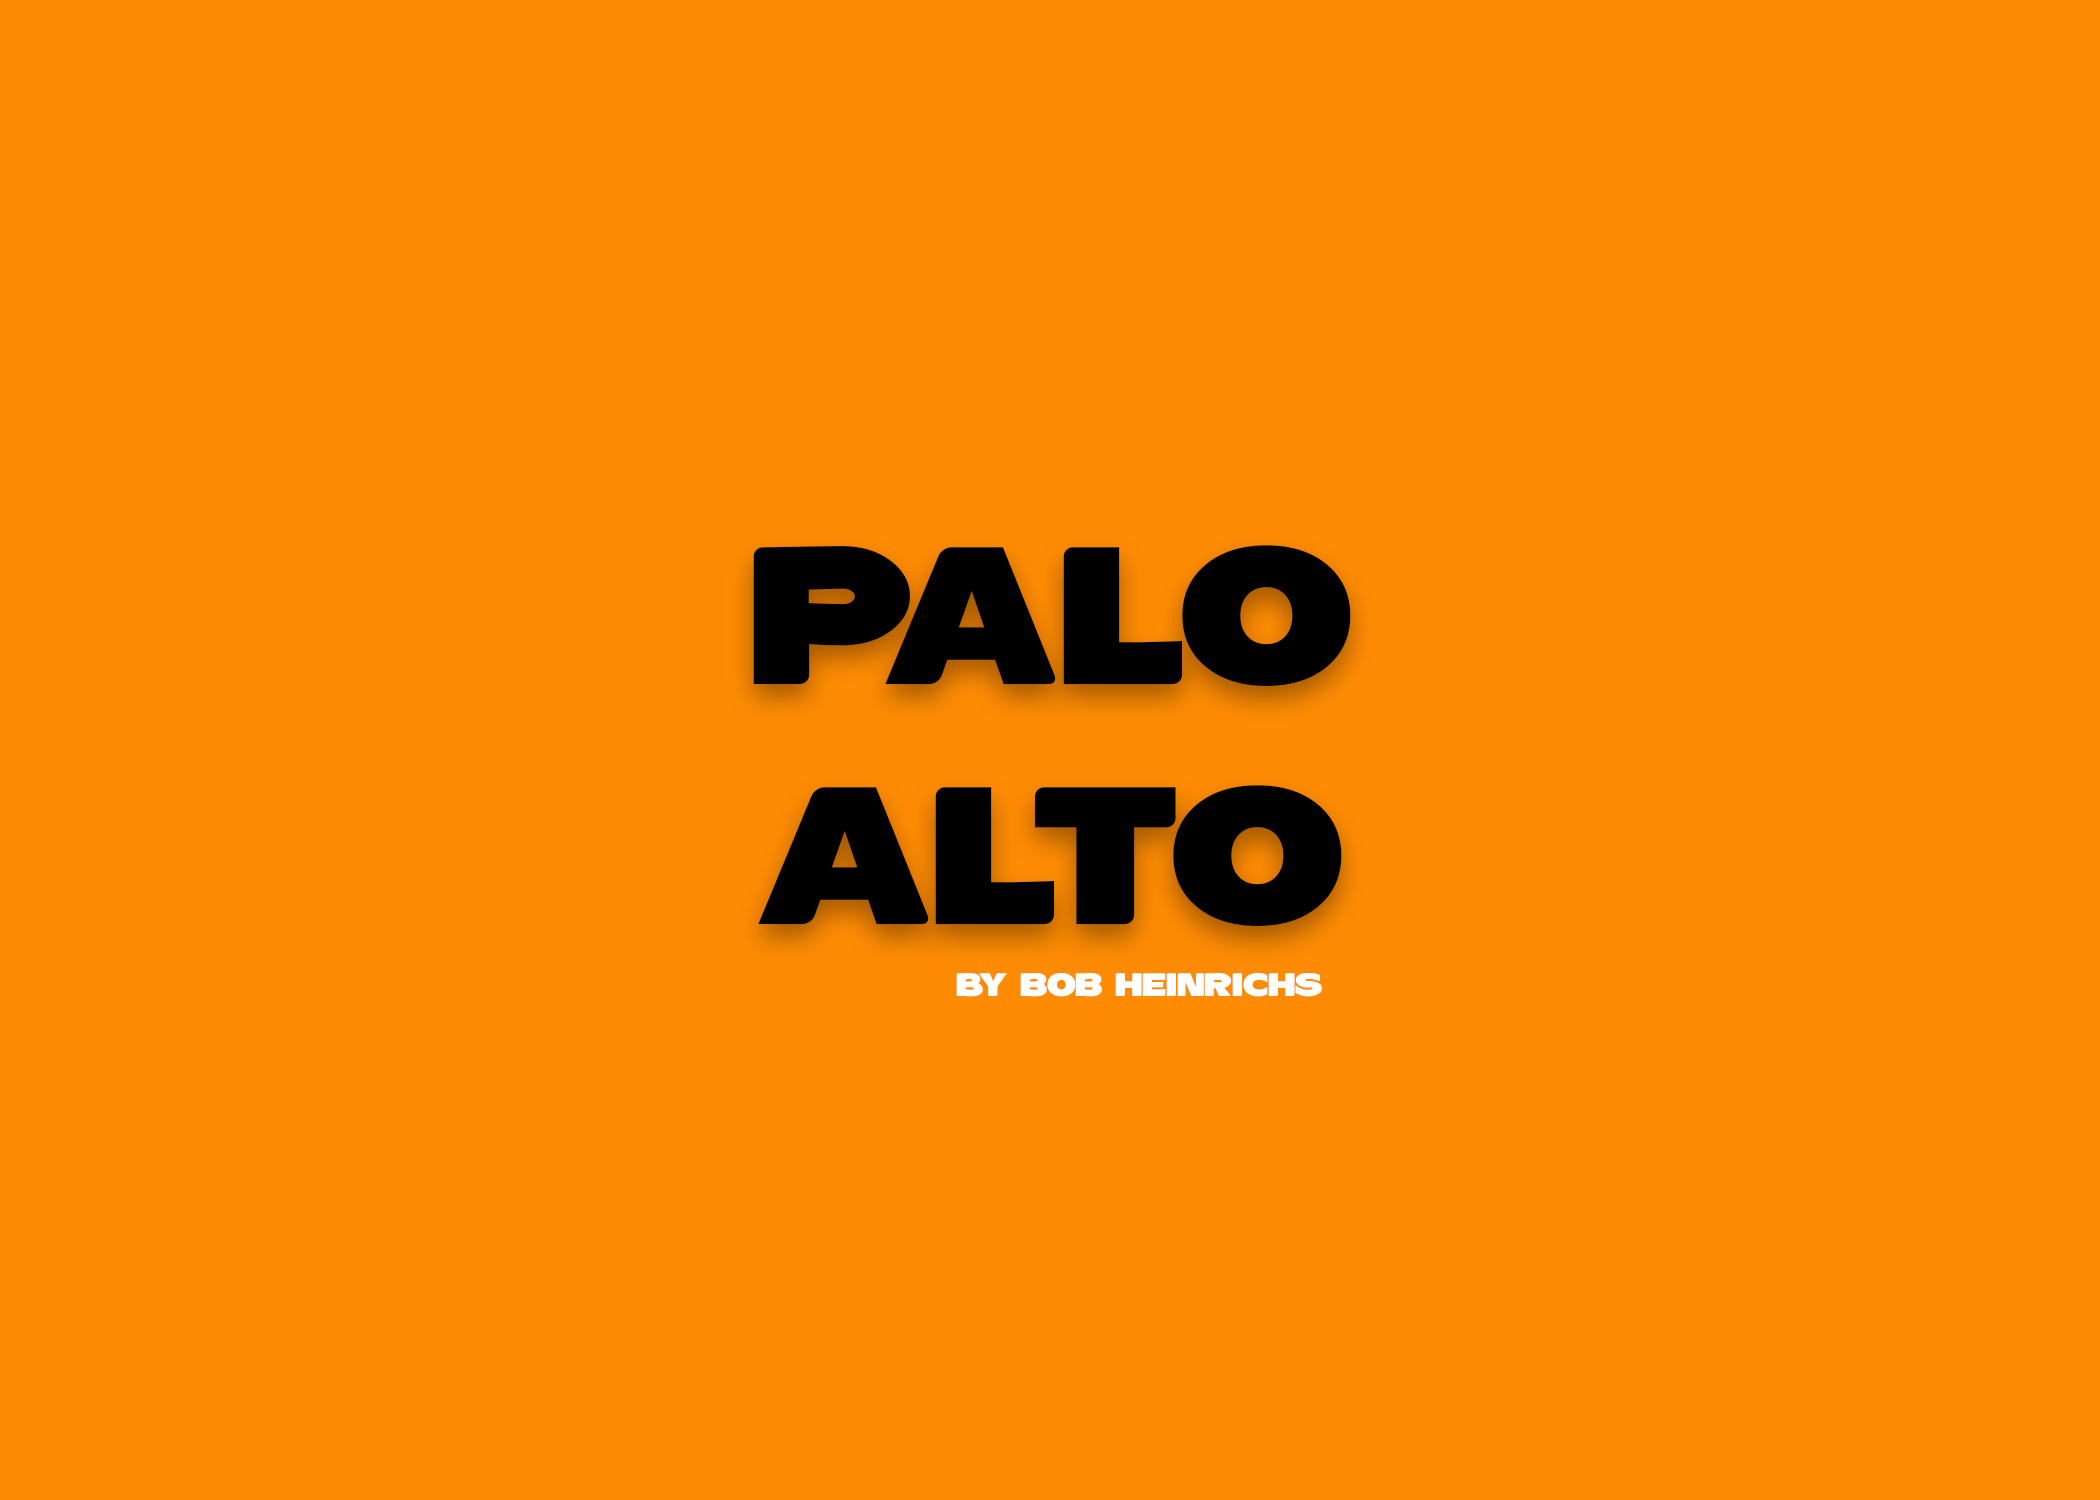 Thelonious Monk Palo Alto HS Album Review